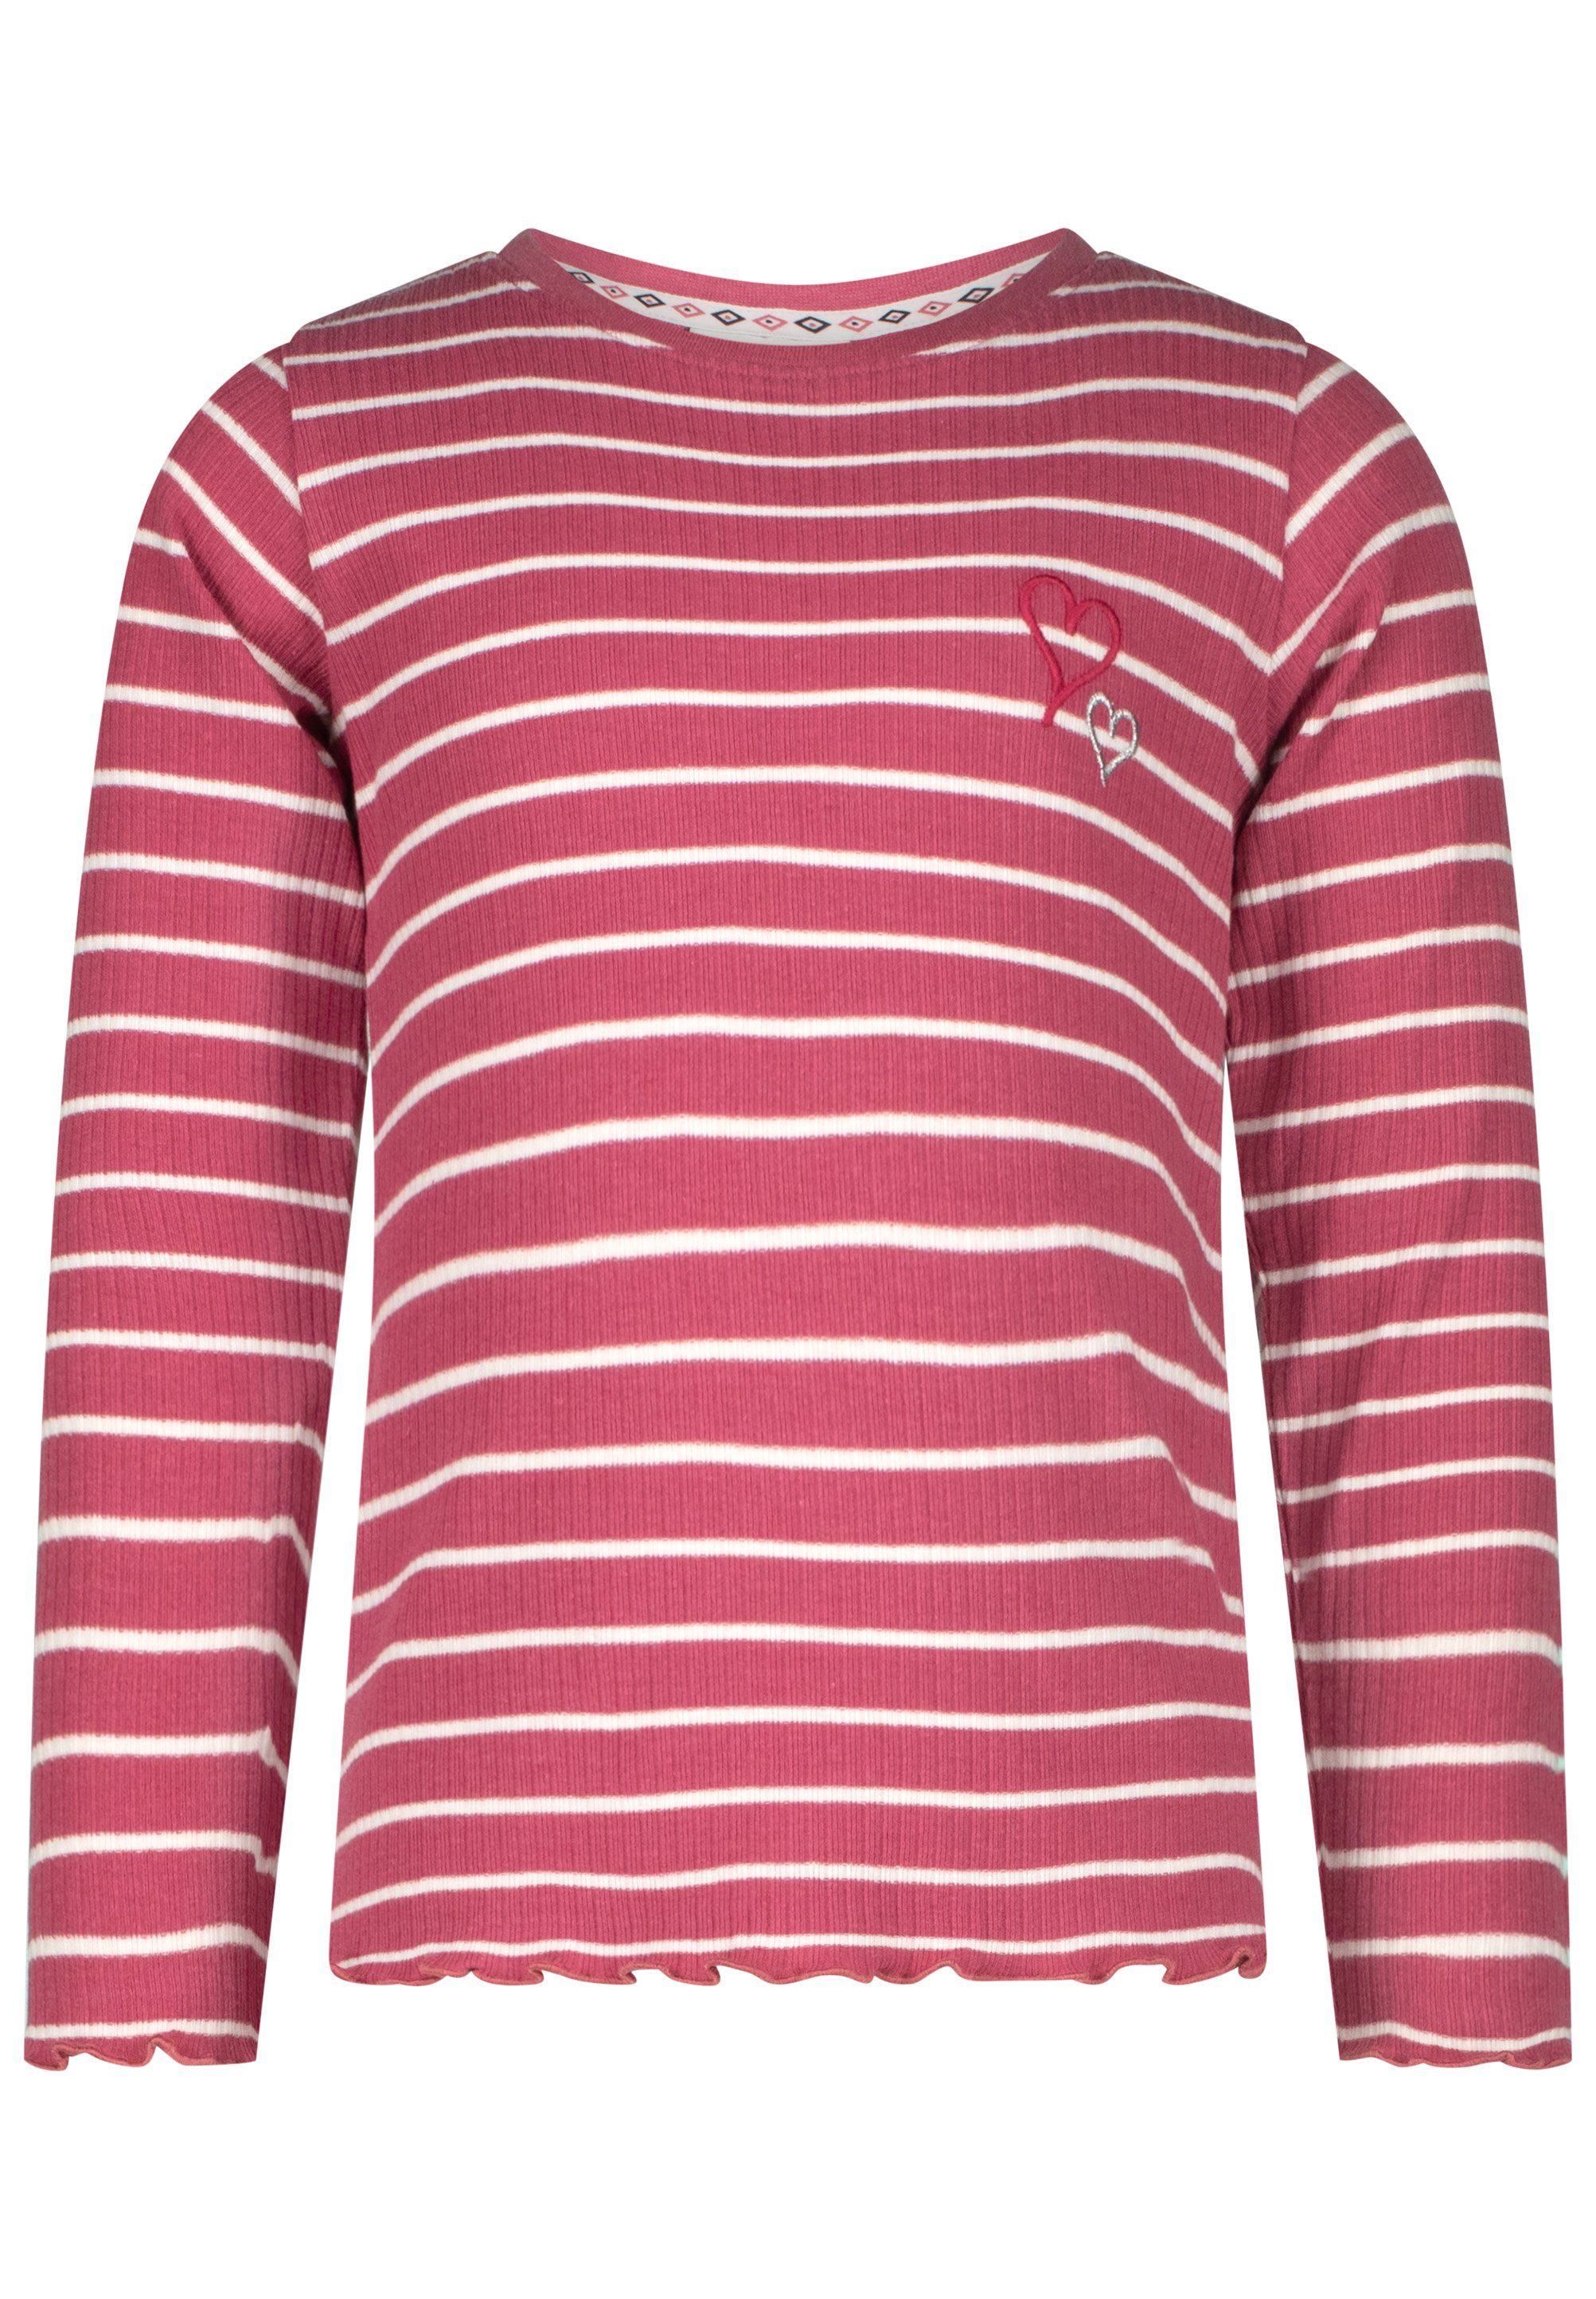 SALT AND PEPPER Langarmshirt Amazing mit trendigem Streifenmuster rosa, weiß | Shirts